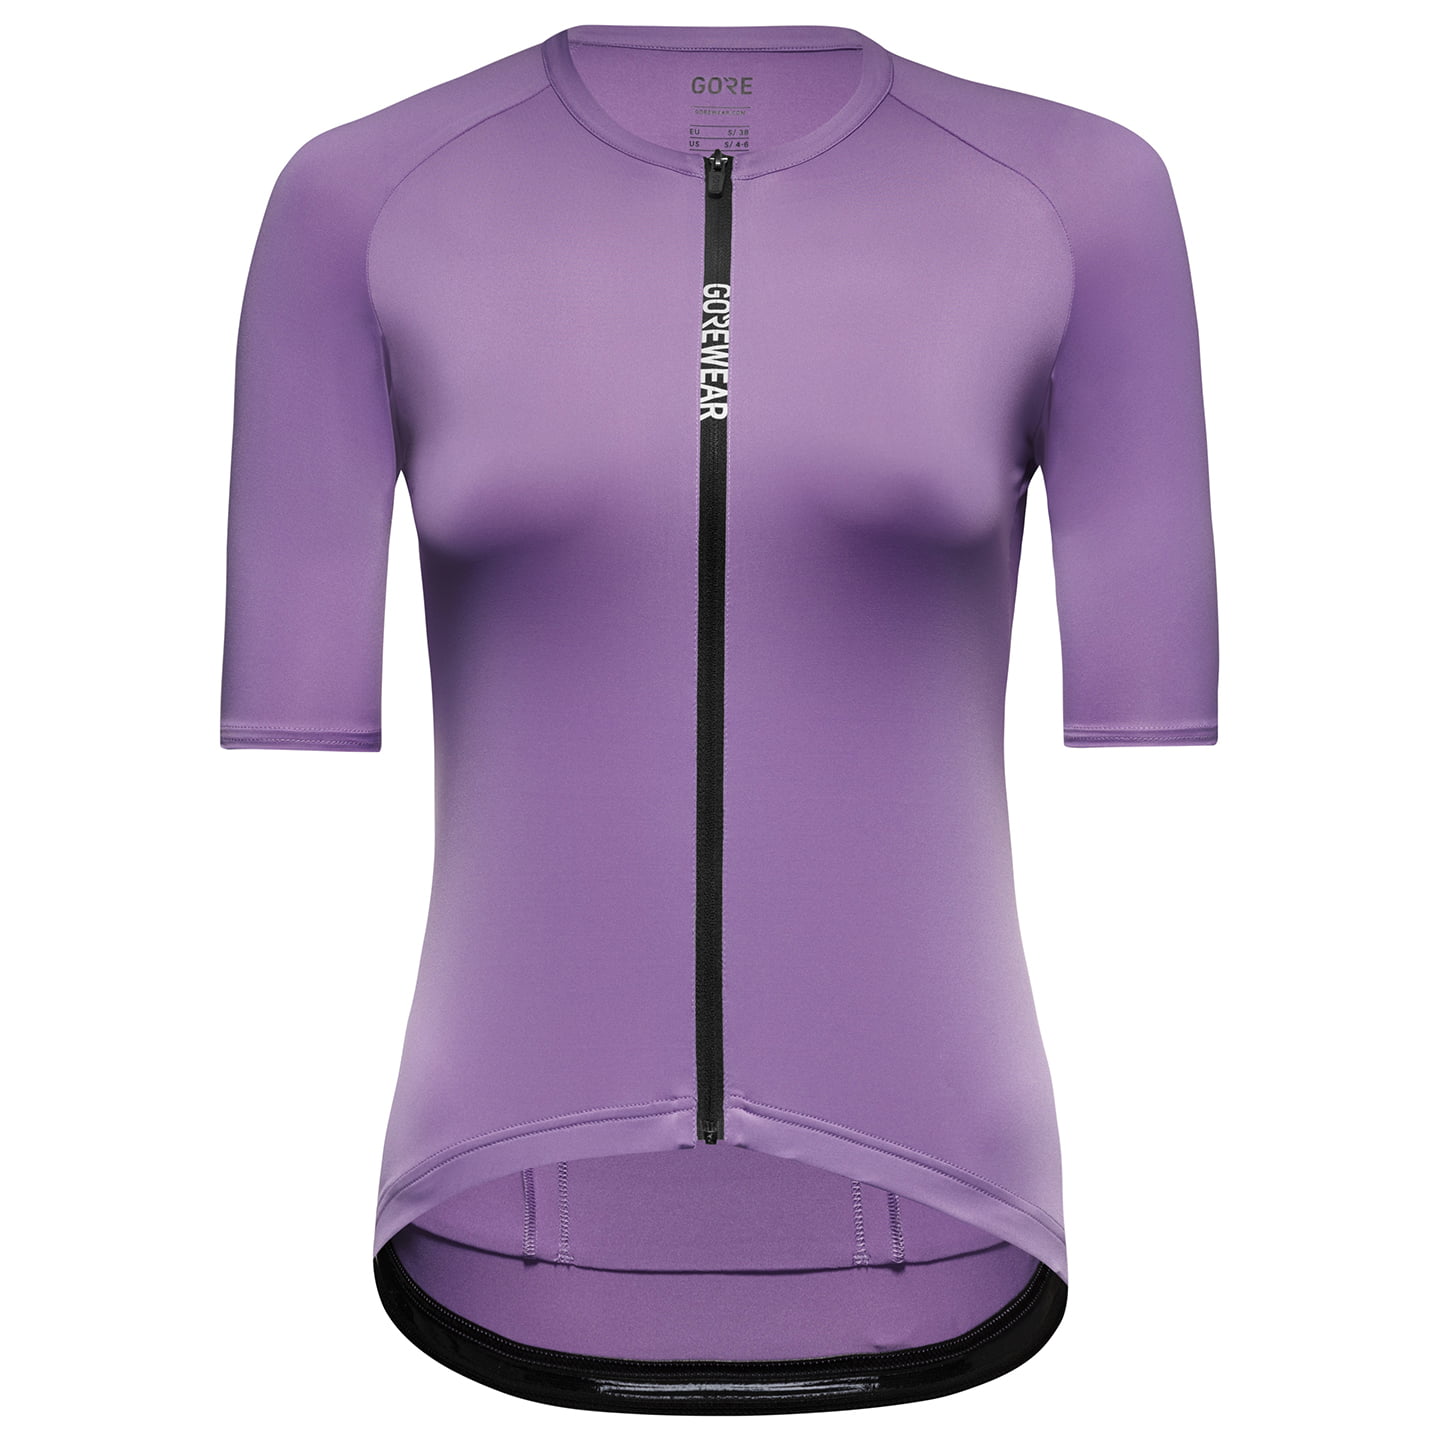 Spinshift Women’s Jersey Women’s Short Sleeve Jersey, size 38, Cycling shirt, Cycling gear